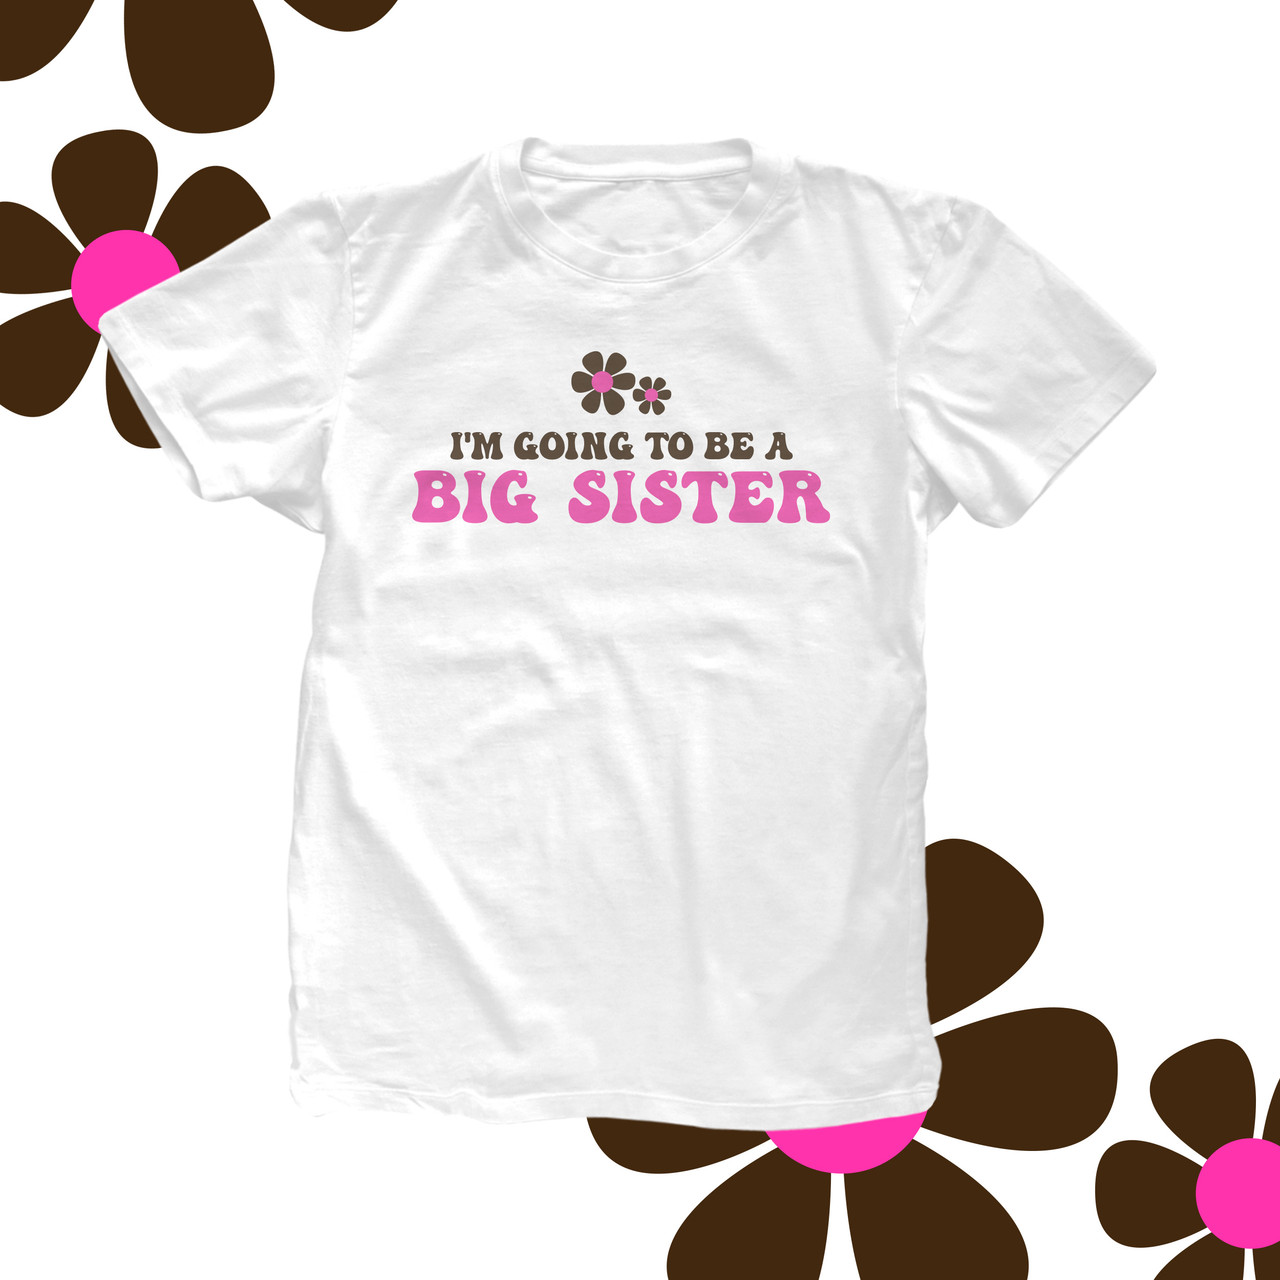 Glitter Baseball Mom Shirt| My Heart is that Field | Baseball Shirt | Bella  Canvas Tshirt | Customize your team & colors